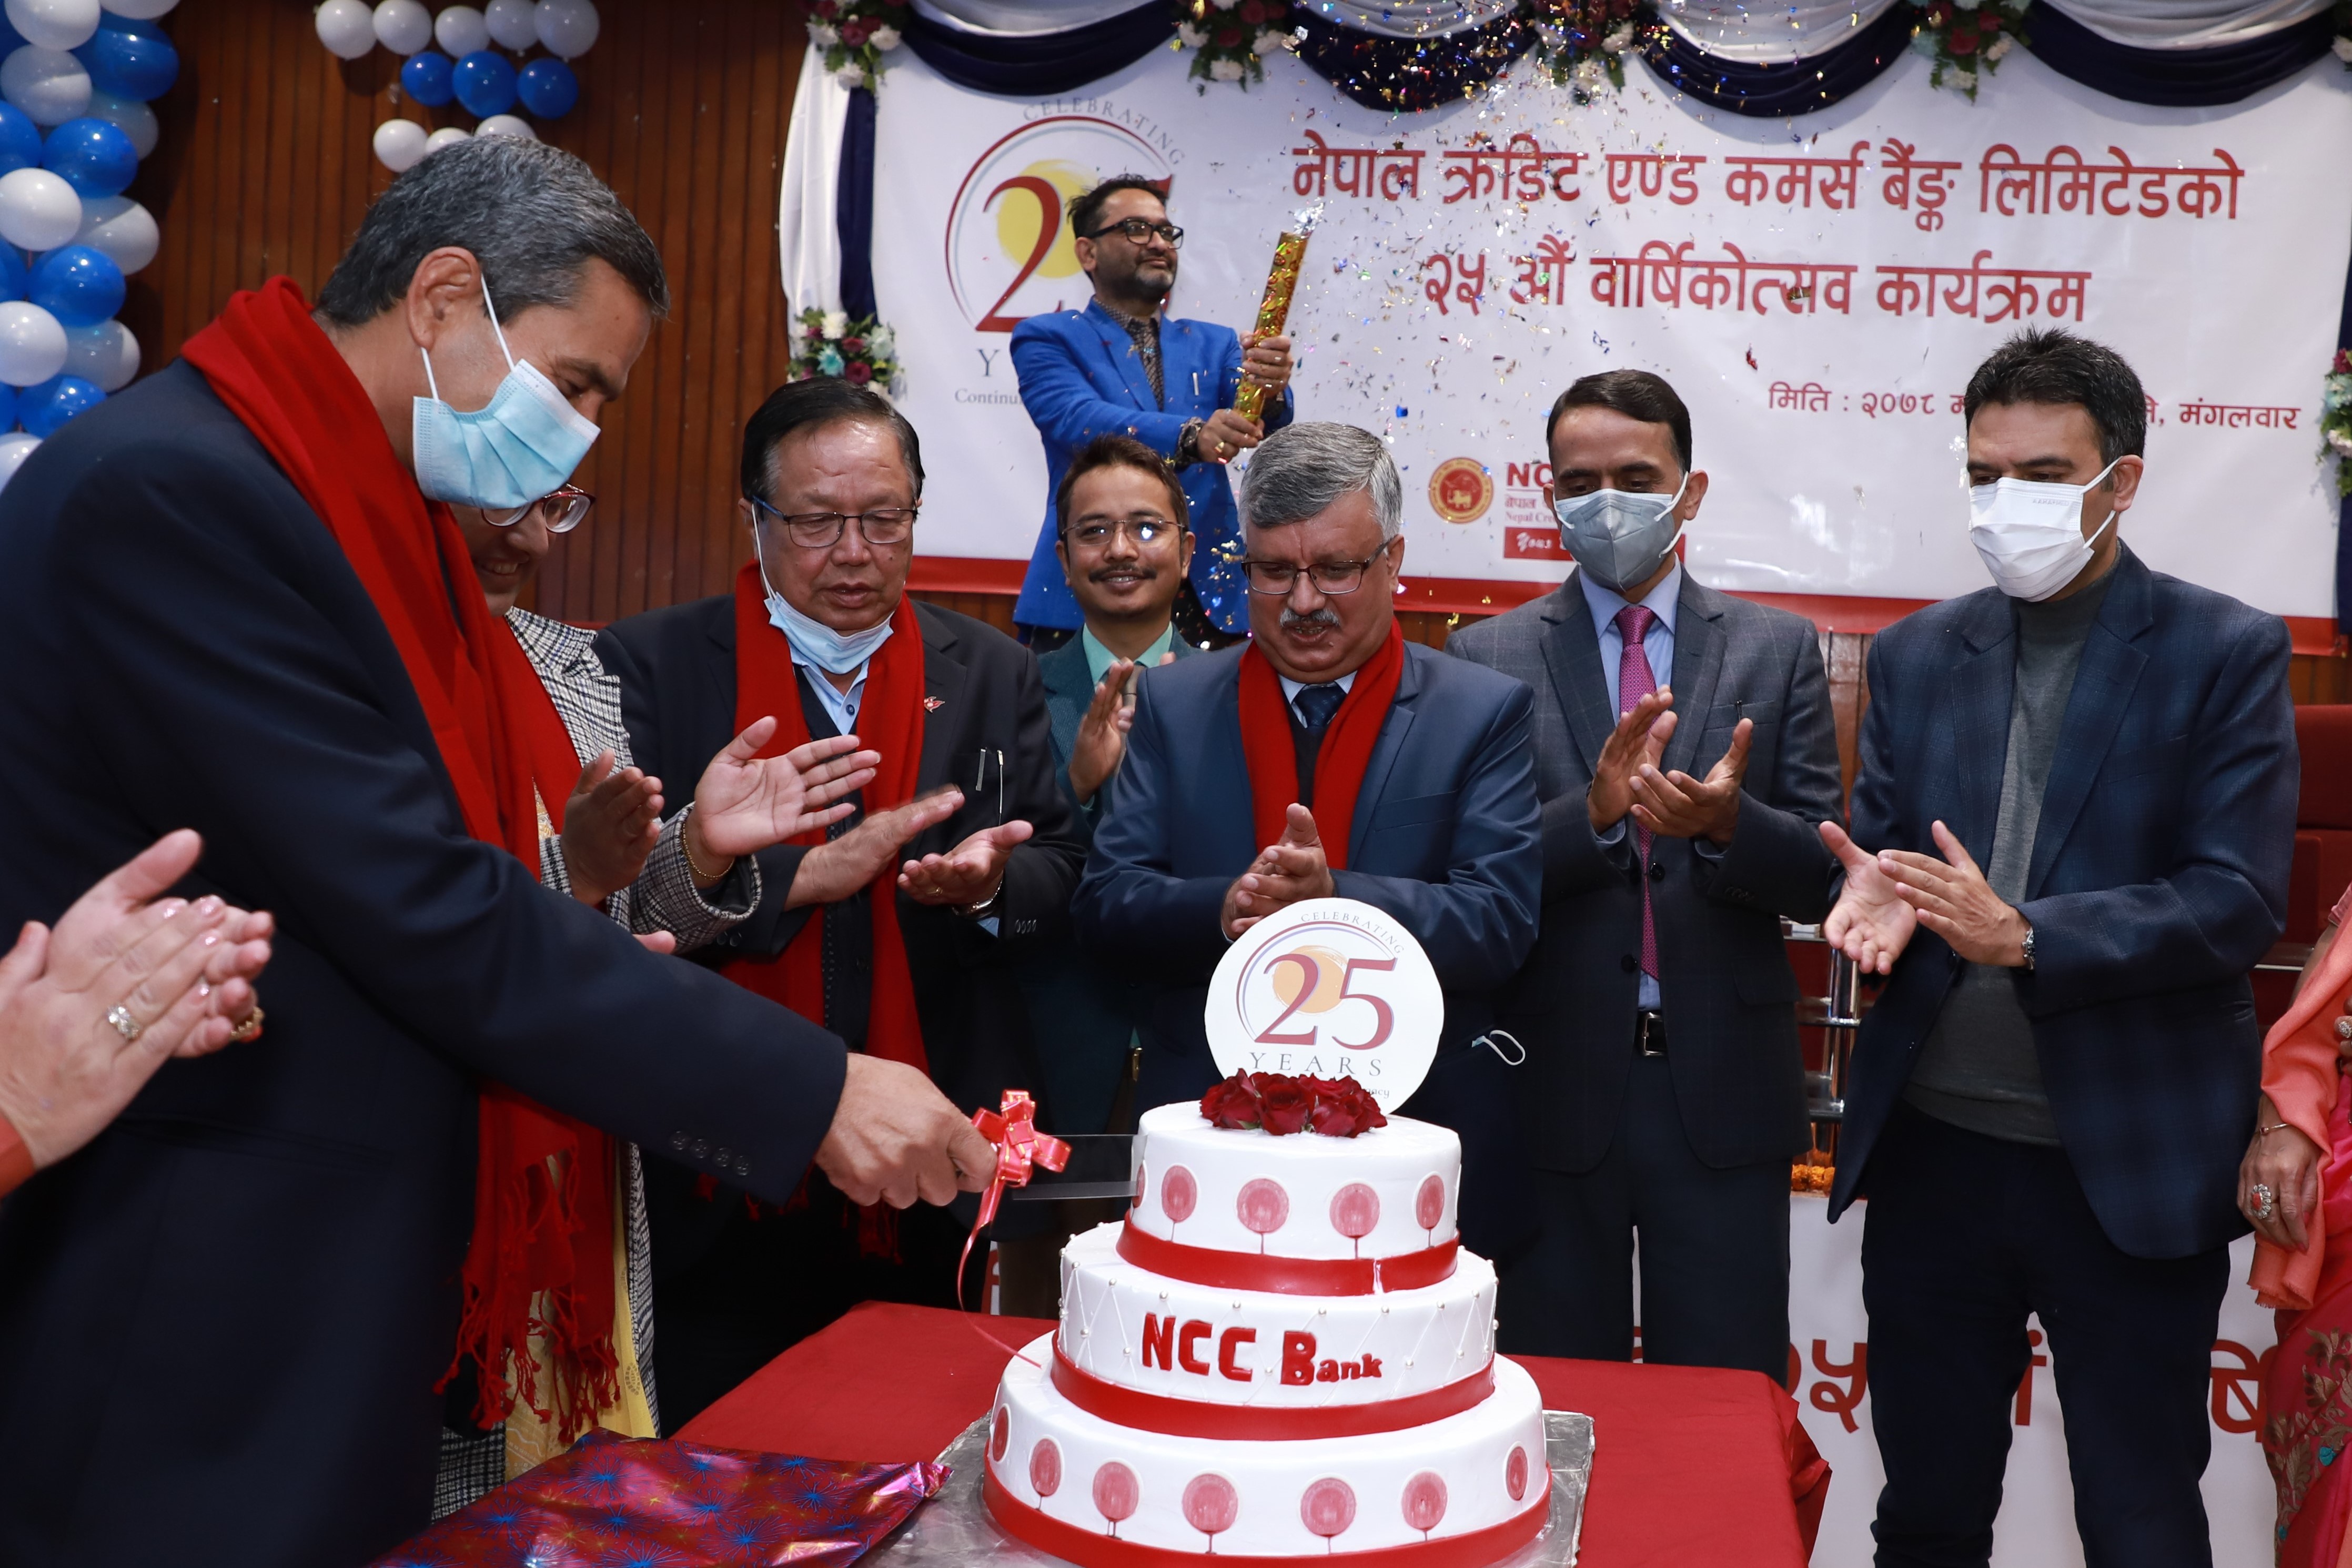 नेपाल क्रेडिट एण्ड कमर्स बैंक २५ औं वर्षमा